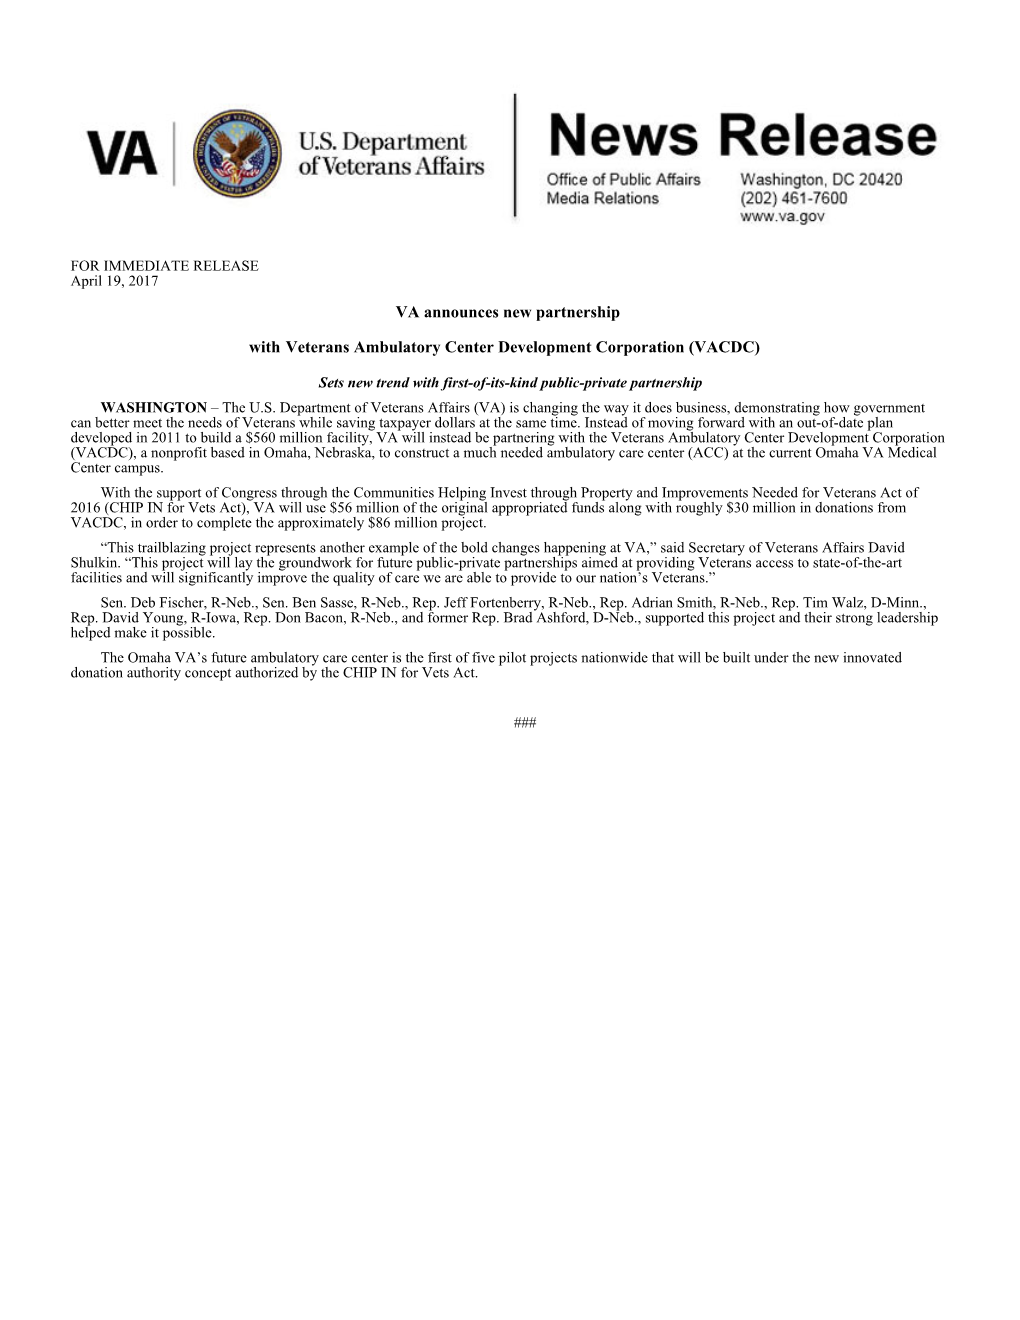 VA Announces New Partnership with Veterans